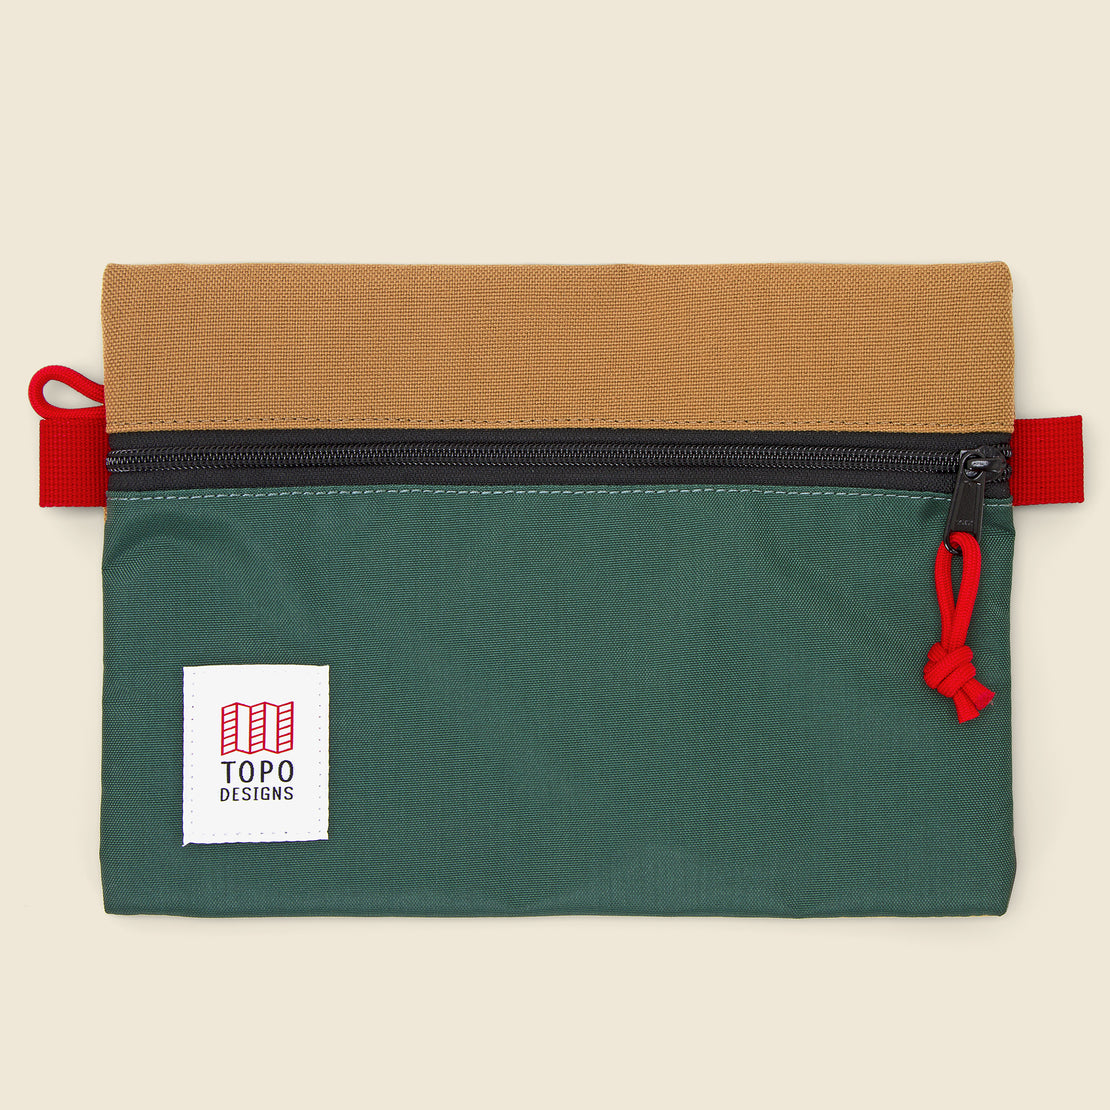 Topo Designs Medium Accessory Bag - Forest/Khaki